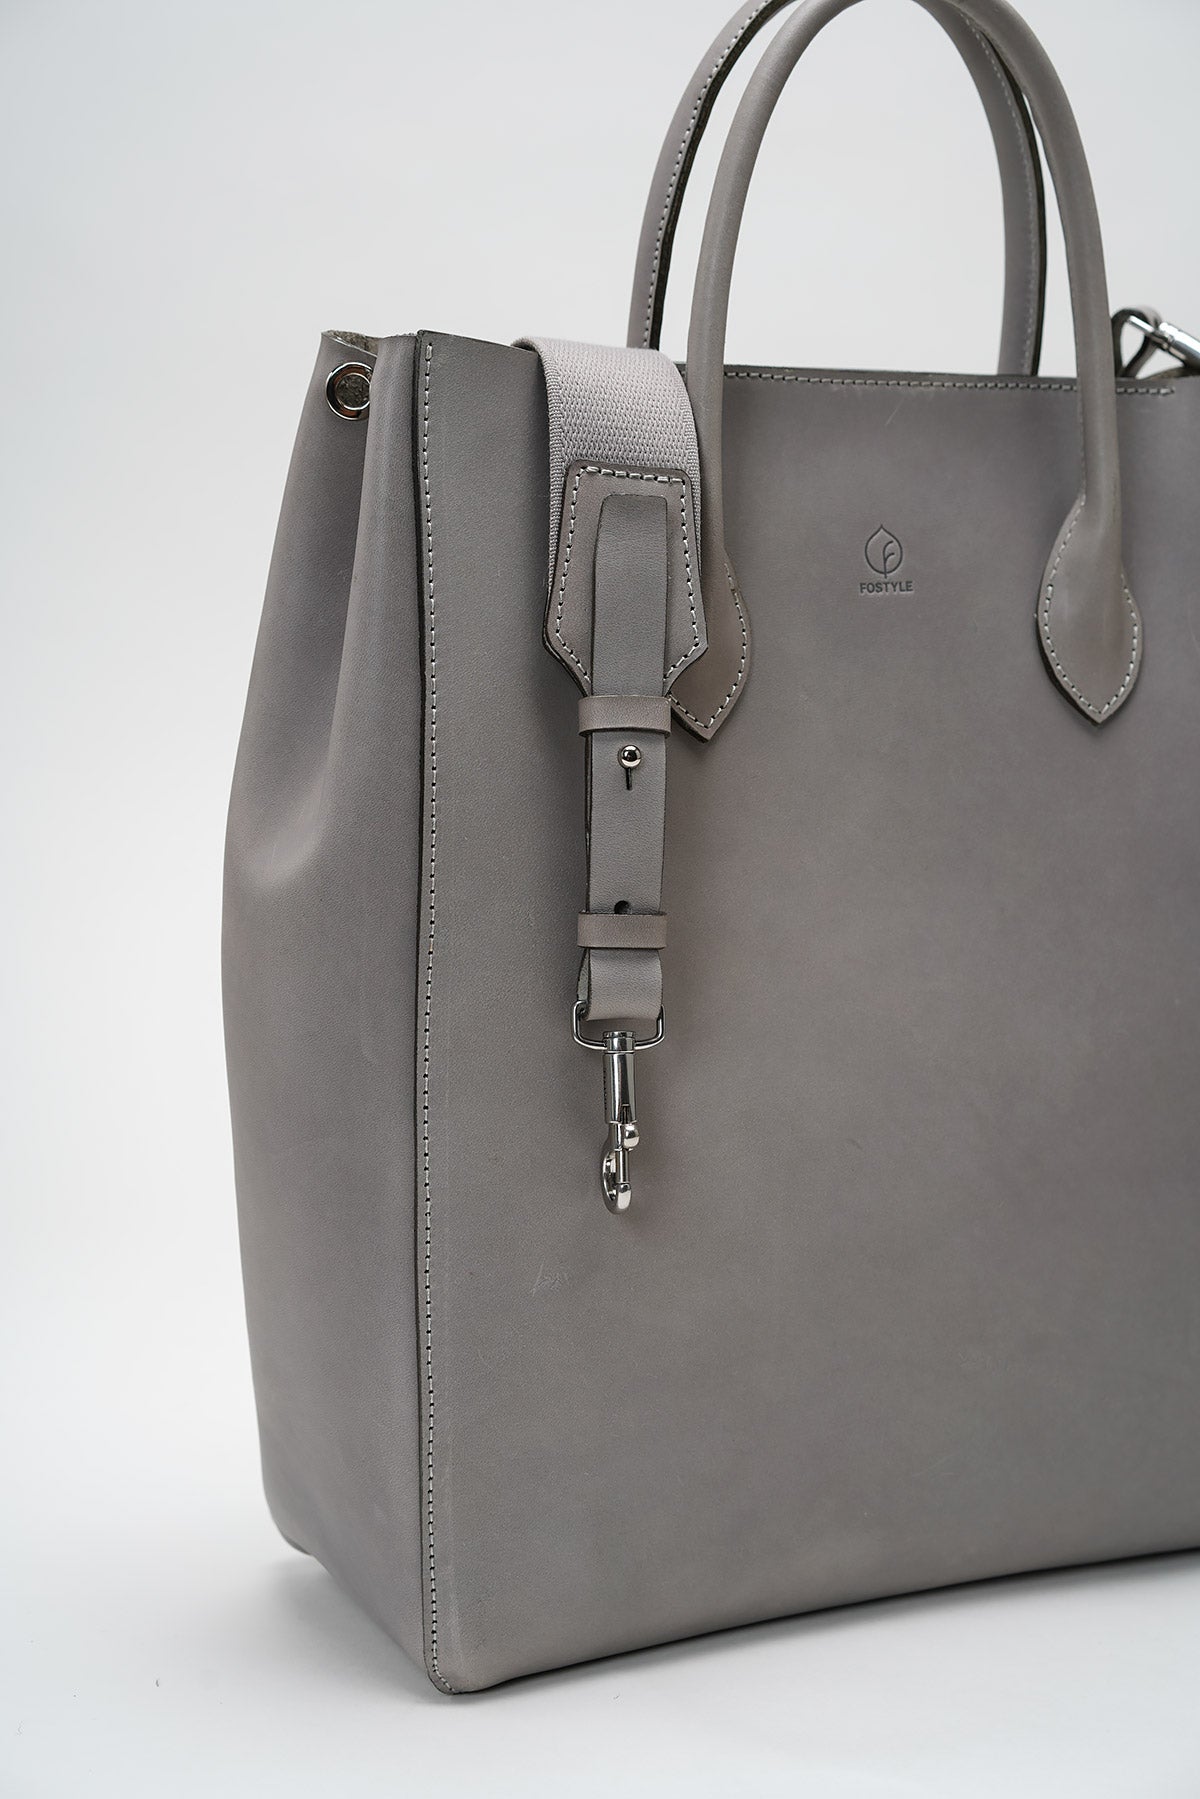 Oversized Hobo Bag Black Leather Tote Bag Unique Handbags for Women  Asymmetrical Bag Slouchy Leather Purse Armhole Bag - Etsy